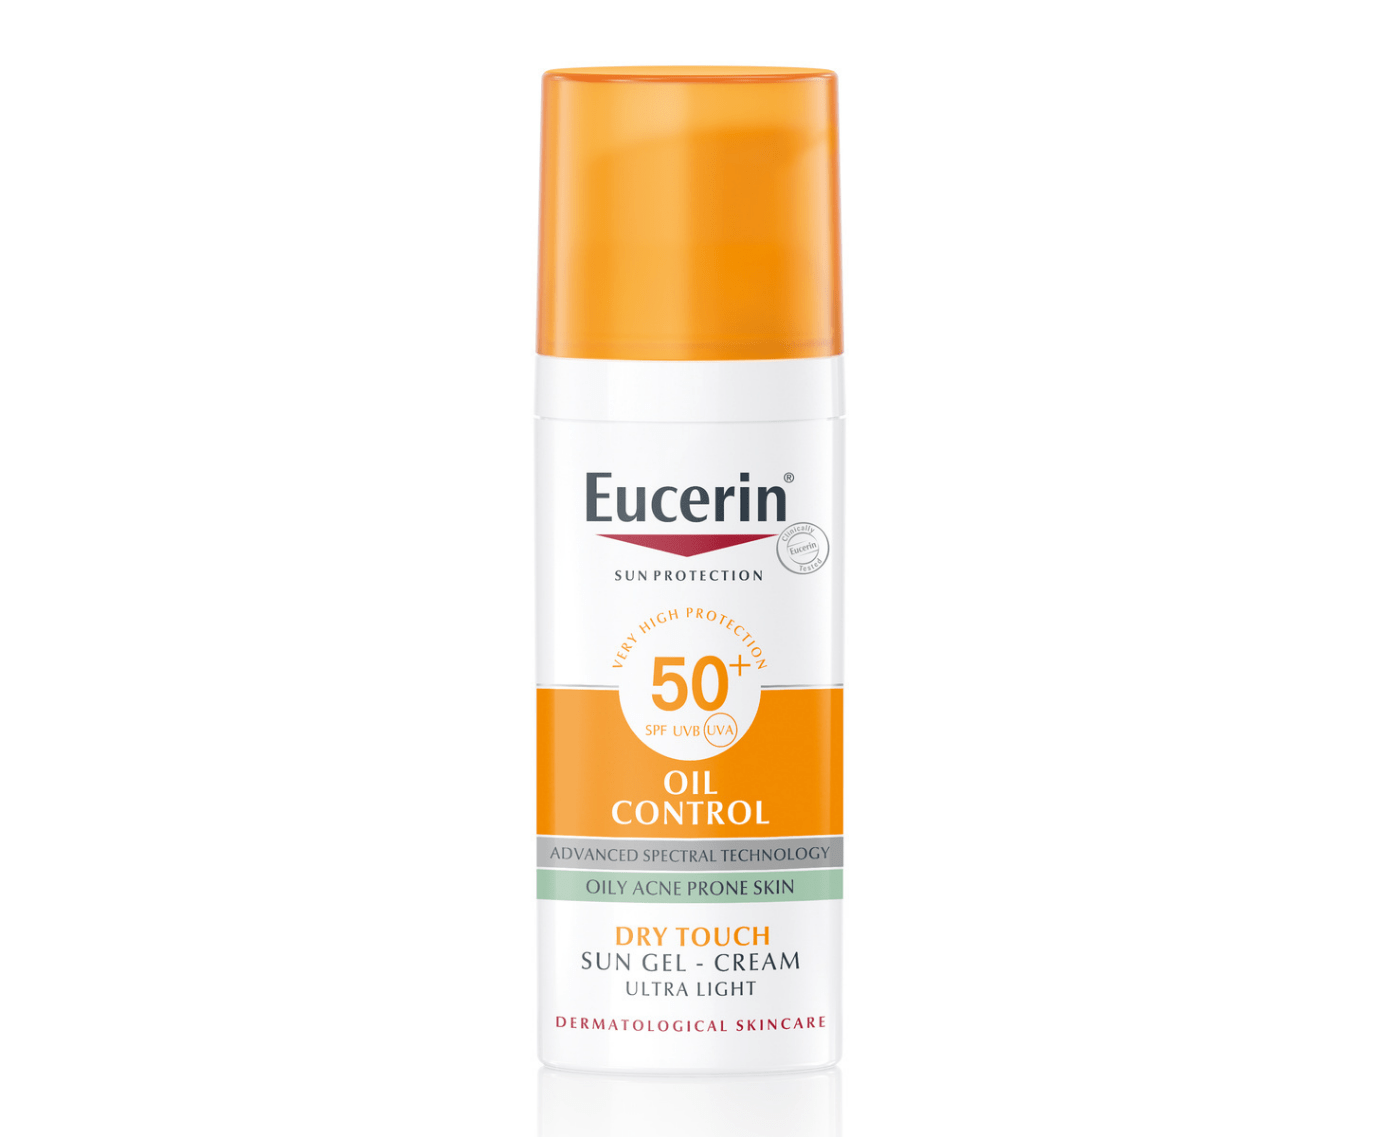 Eucerin Oil Control Sun Gel-Cream Dry Touch SPF50+